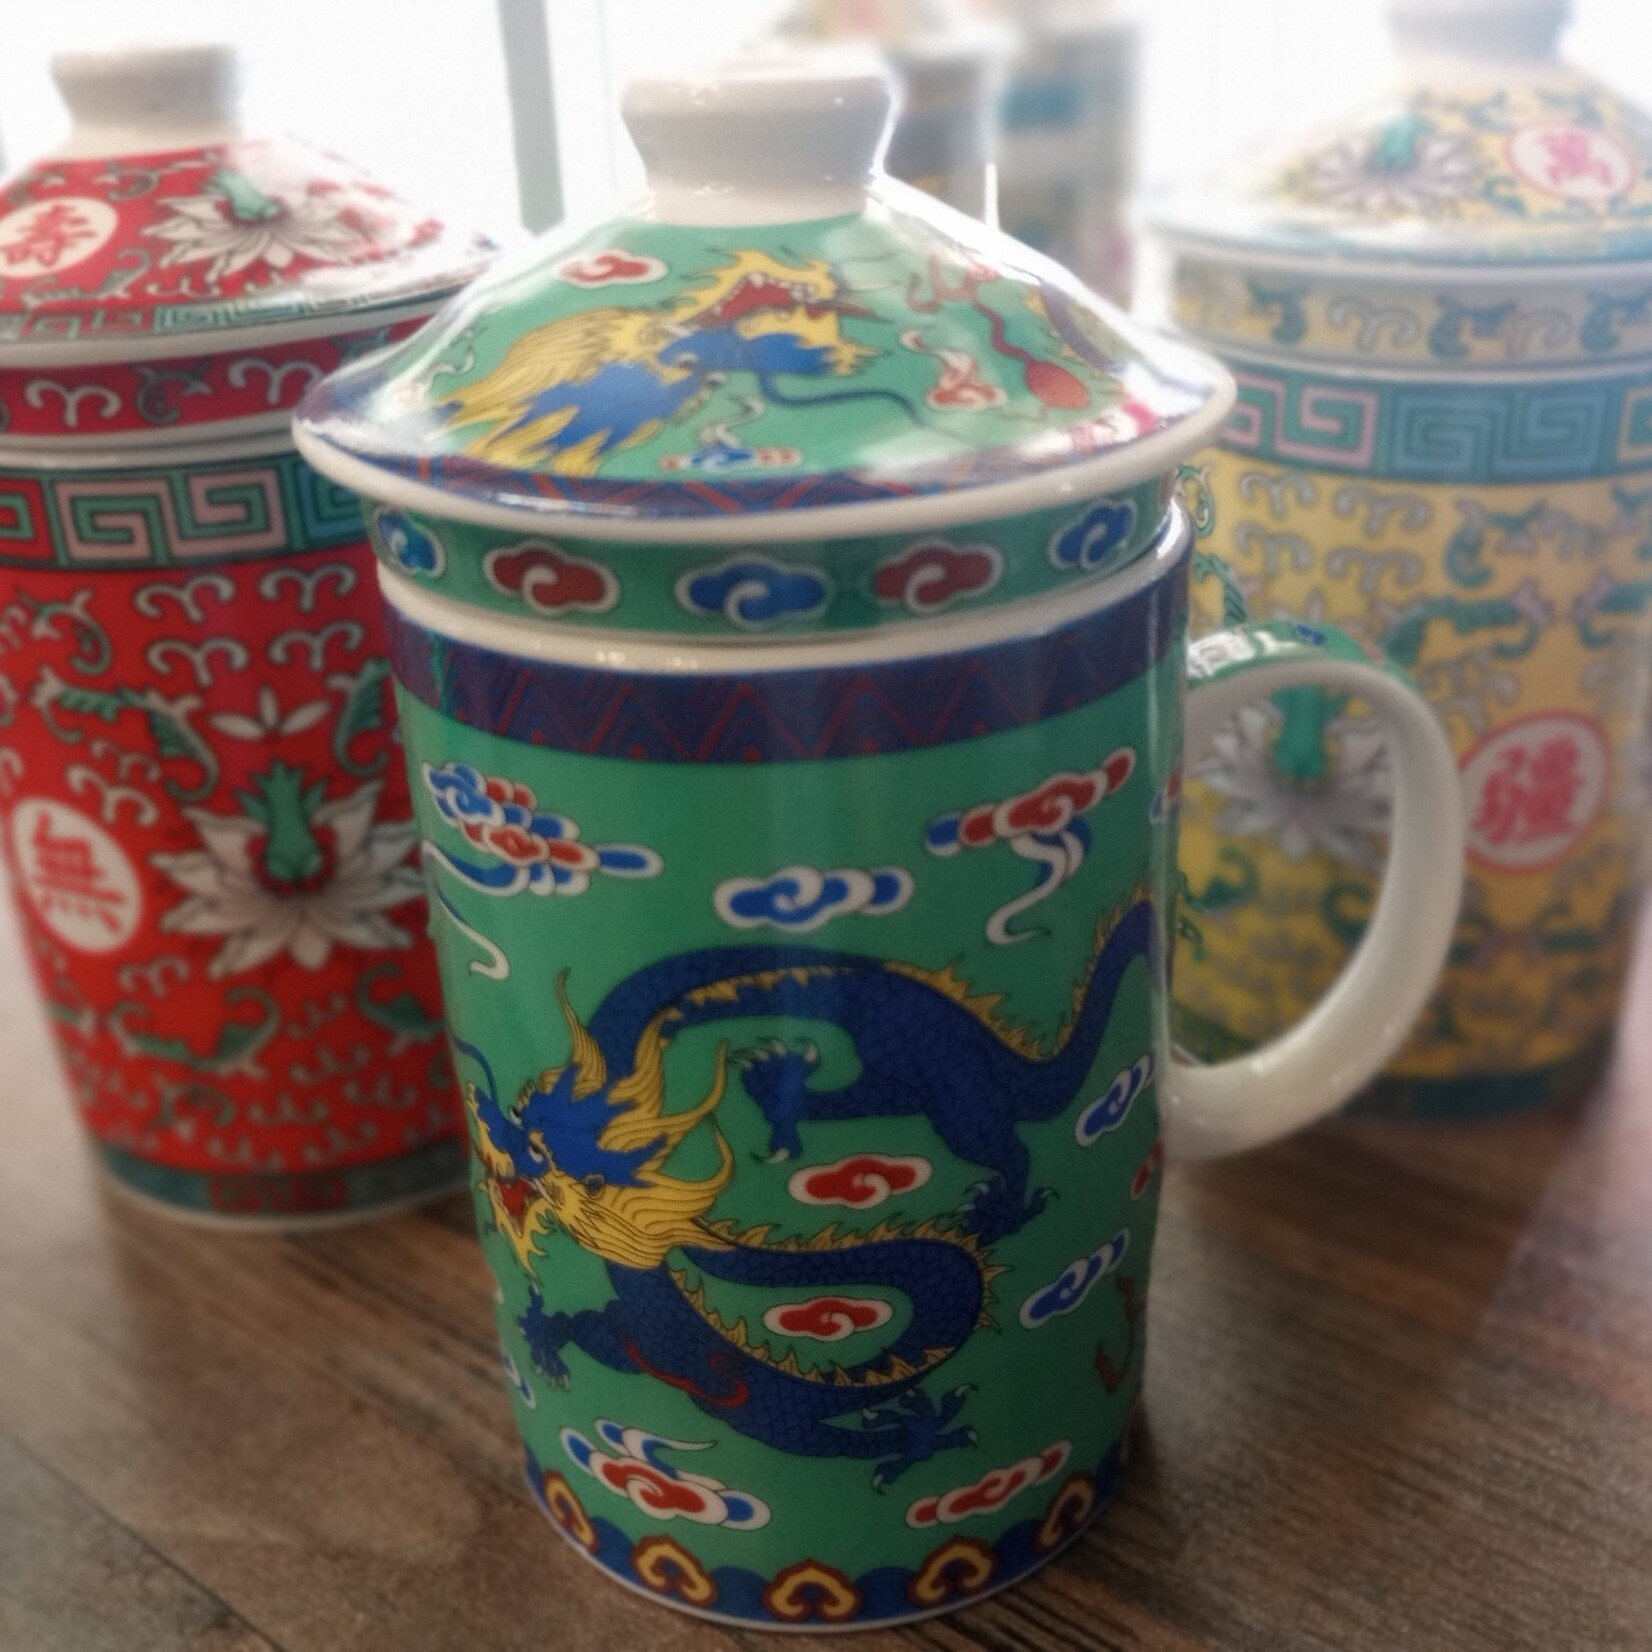 Chinese Ceramic Mug with Ceramic Infuser: